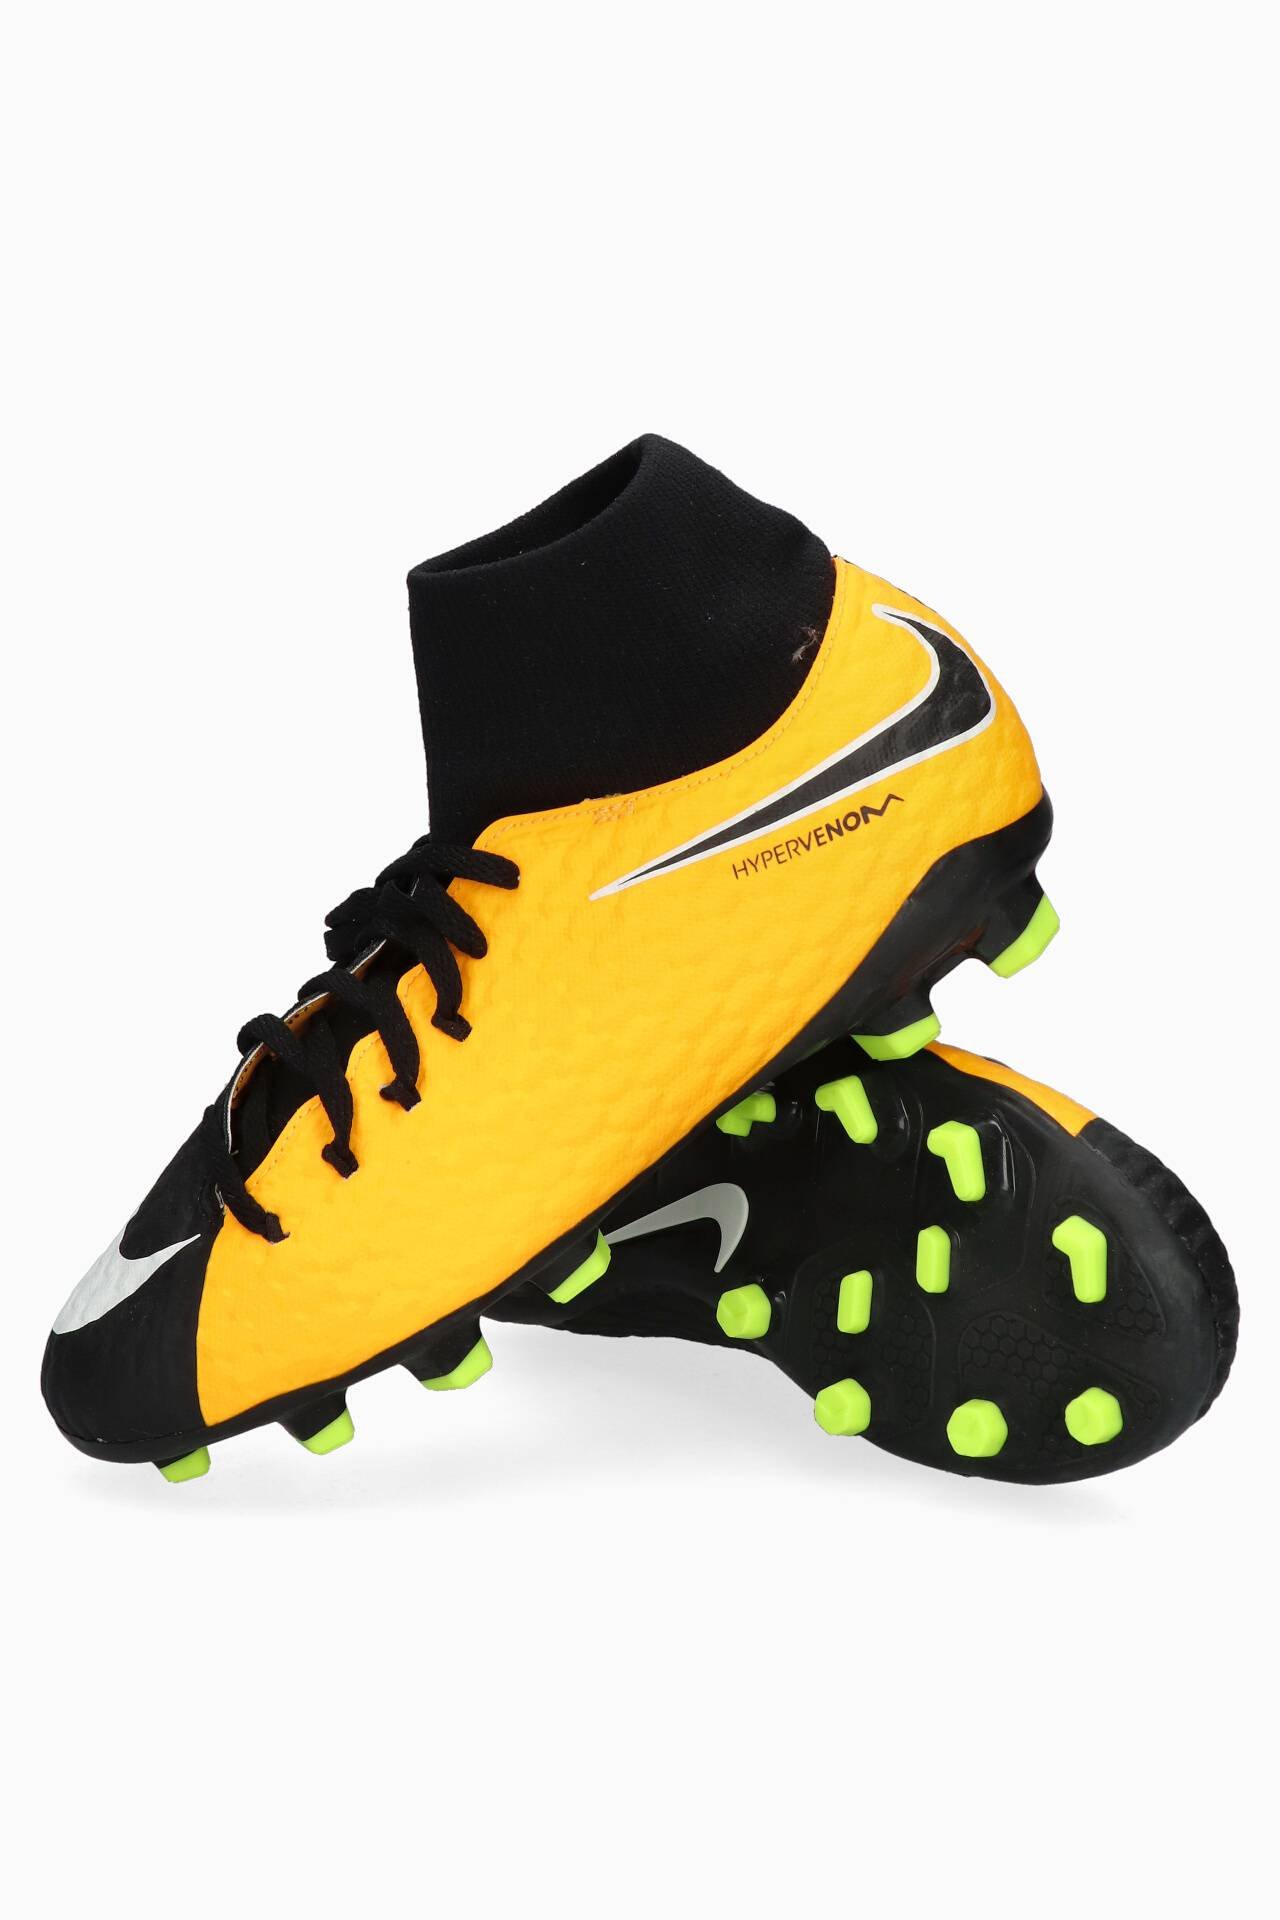 Cleats Nike Hypervenom III DF FG Junior | R-GOL.com - Football boots & equipment